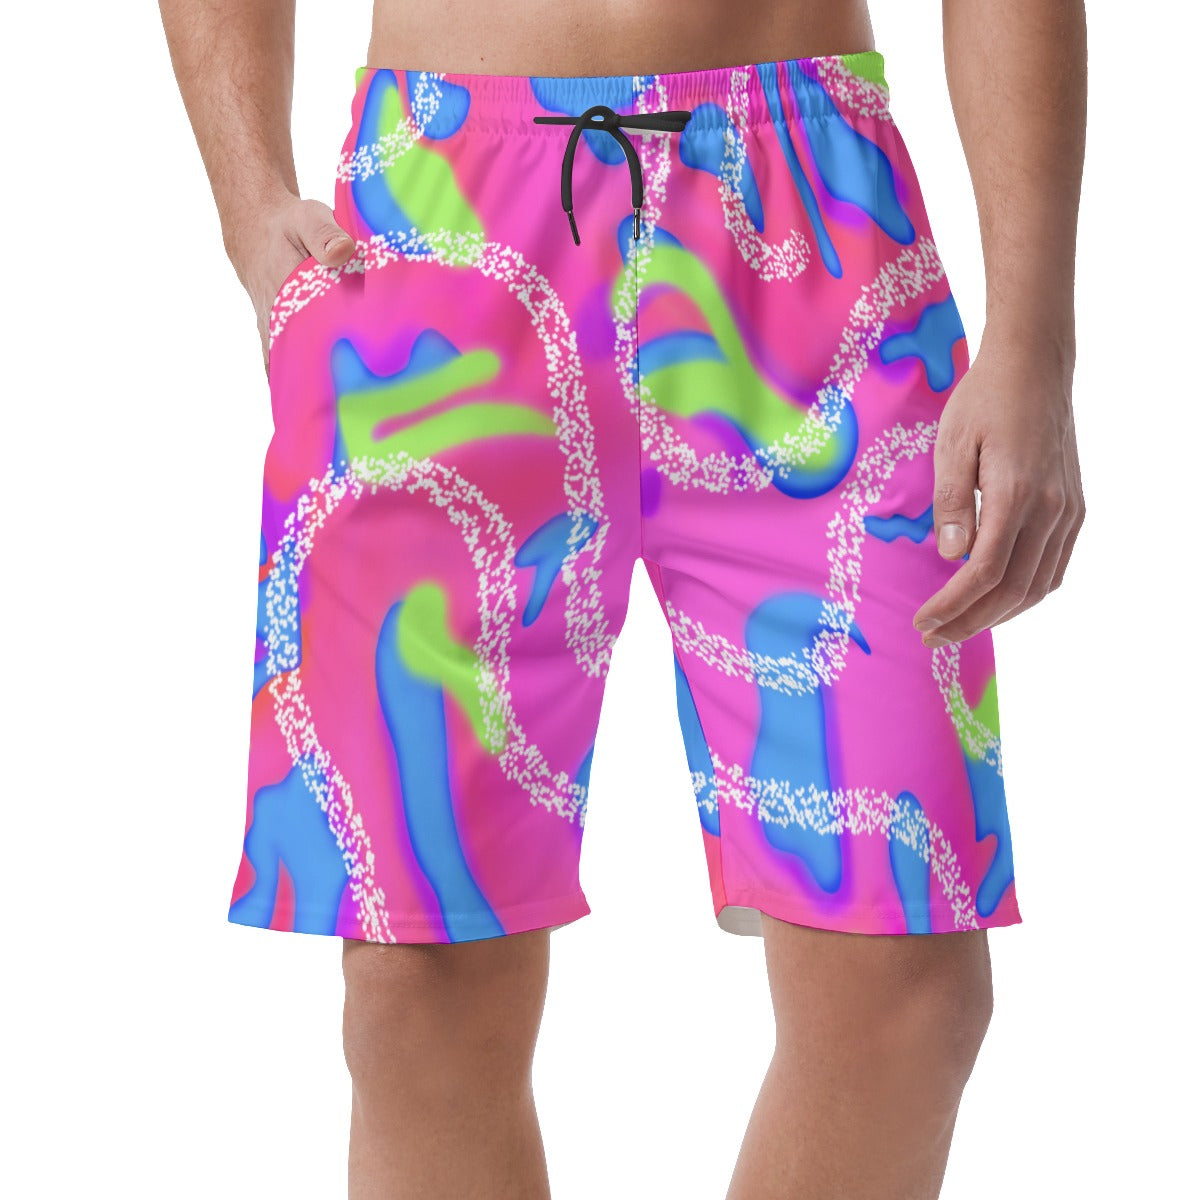 Hot pink men's short shorts